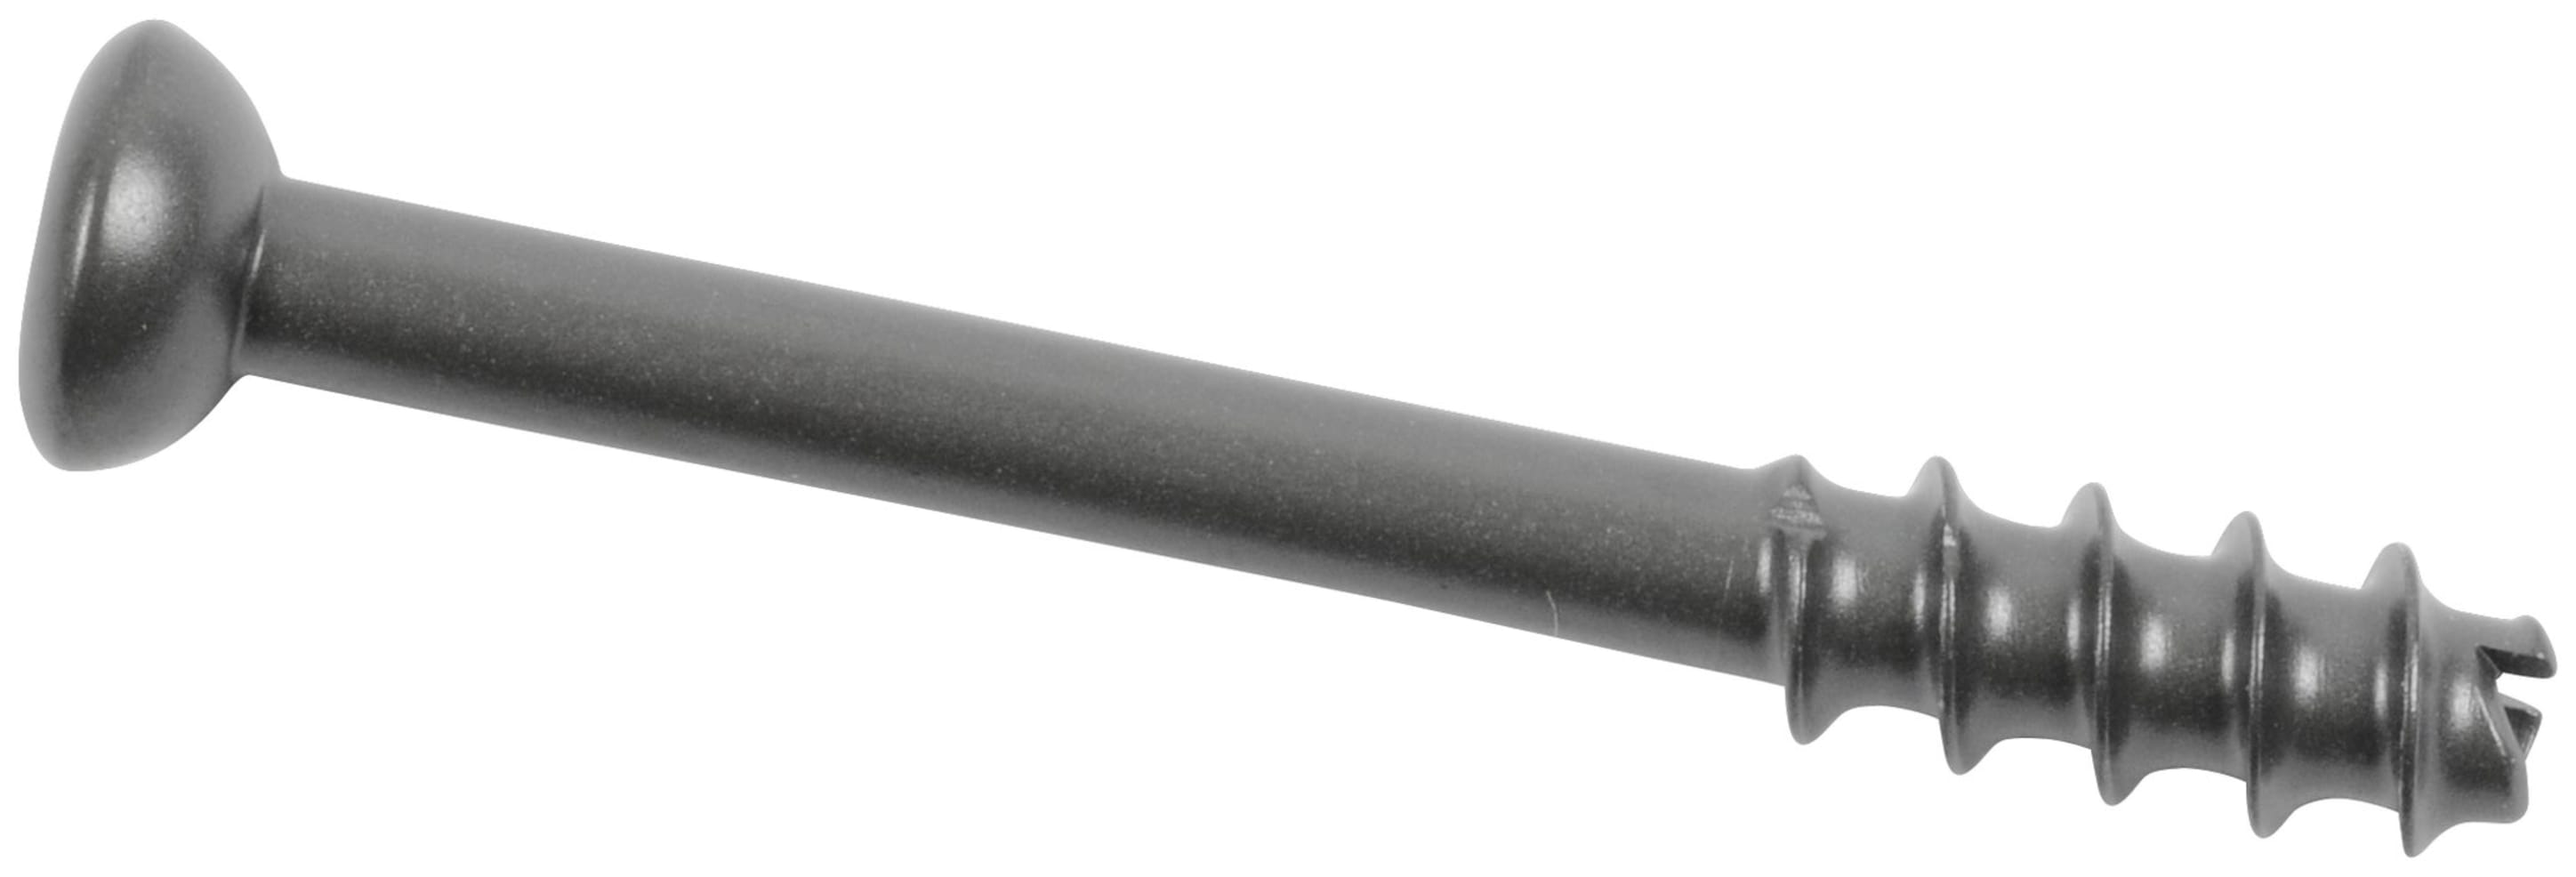 Cannulated Screw, Partially Threaded, Titanium, 3.75 mm x 30 mm